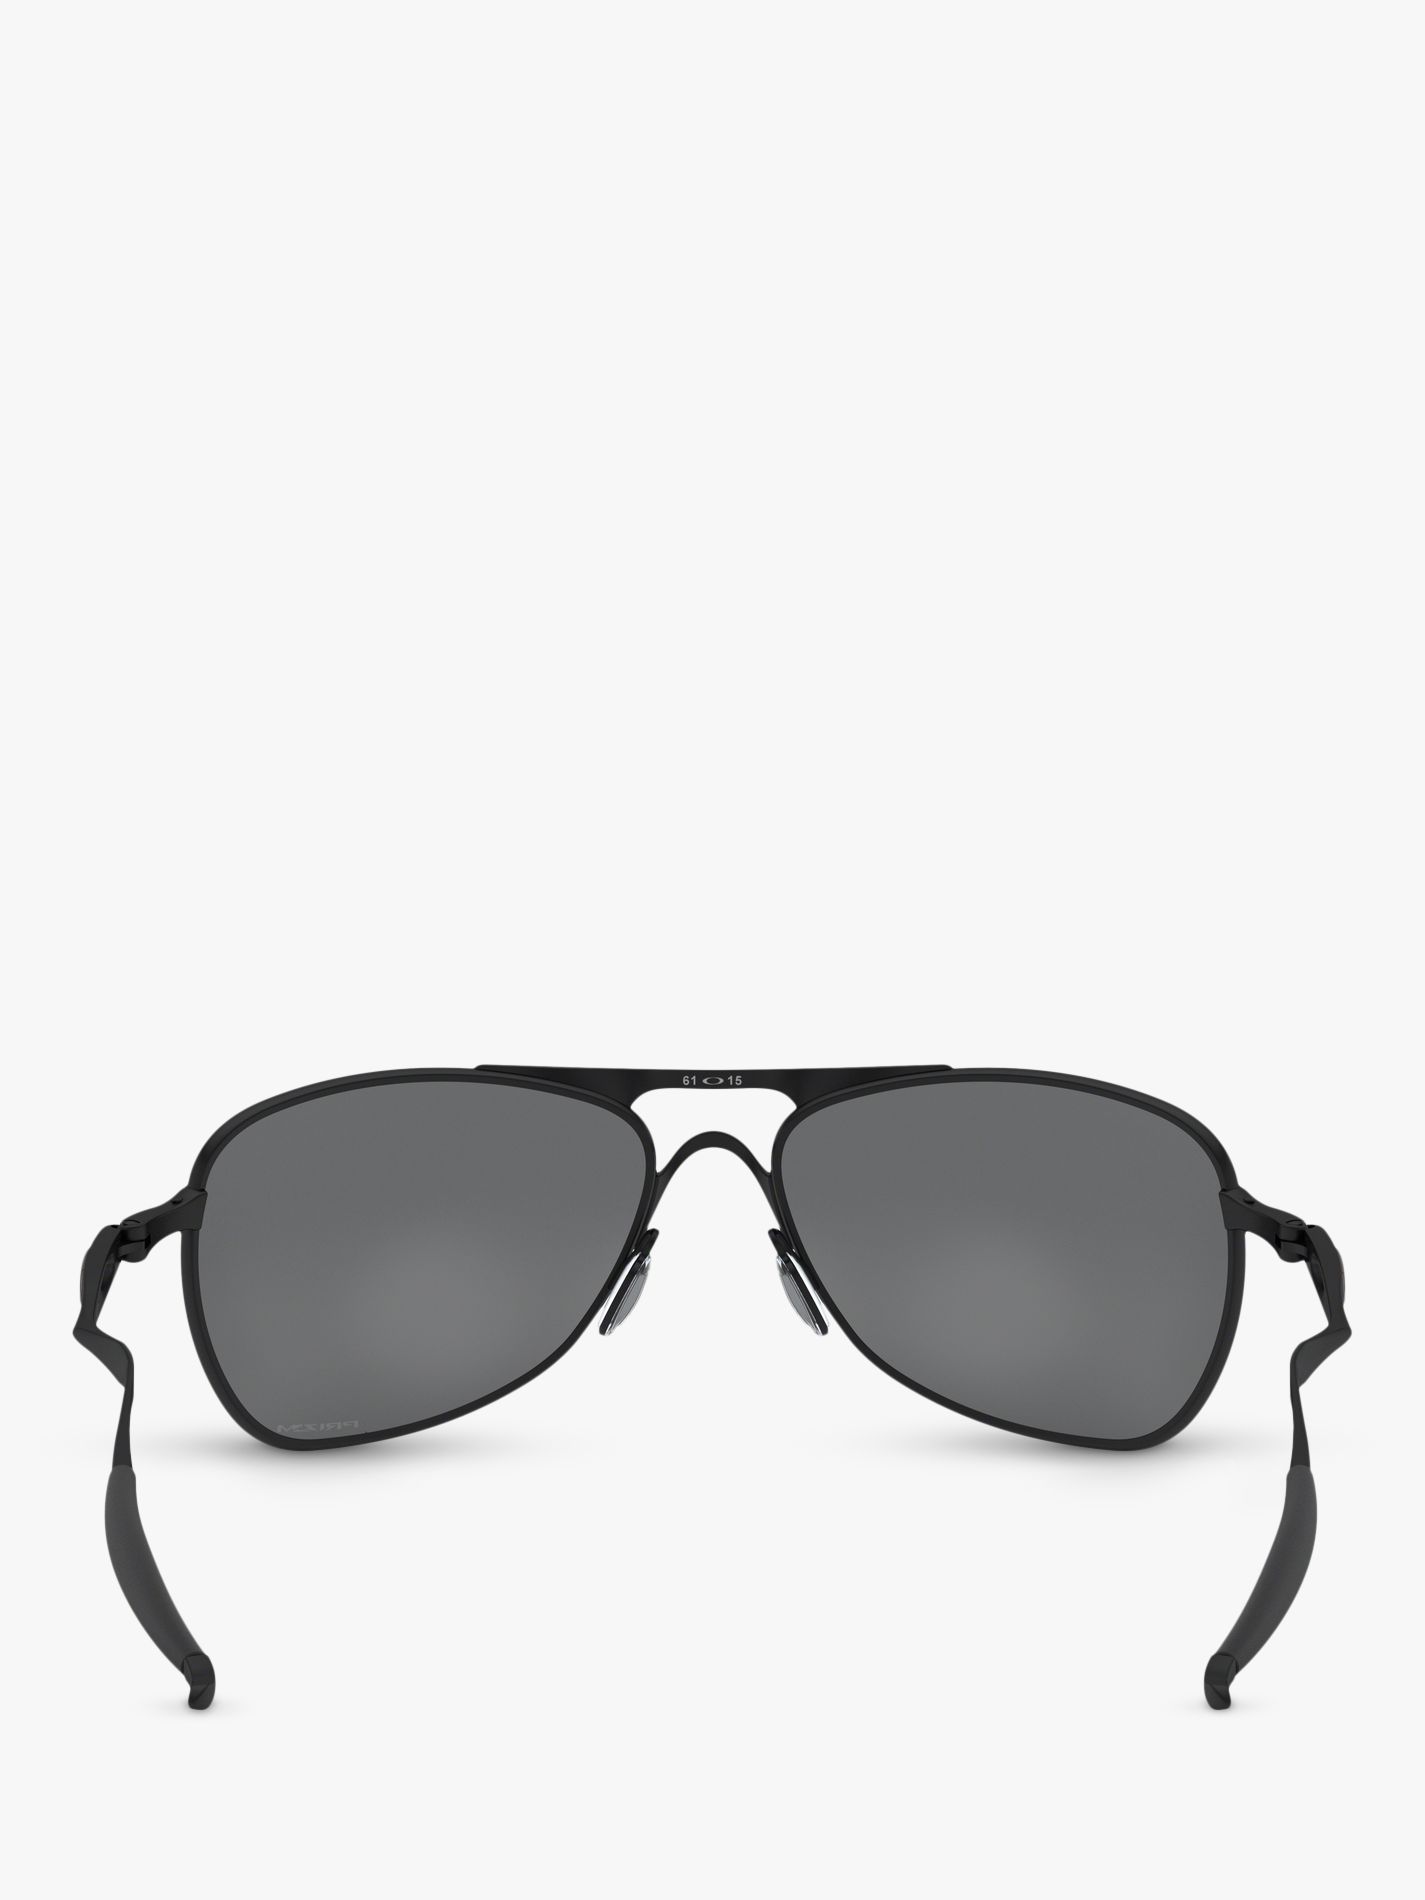 Buy Oakley OO4060 Men's Cross Hair Square Sunglasses Online at johnlewis.com